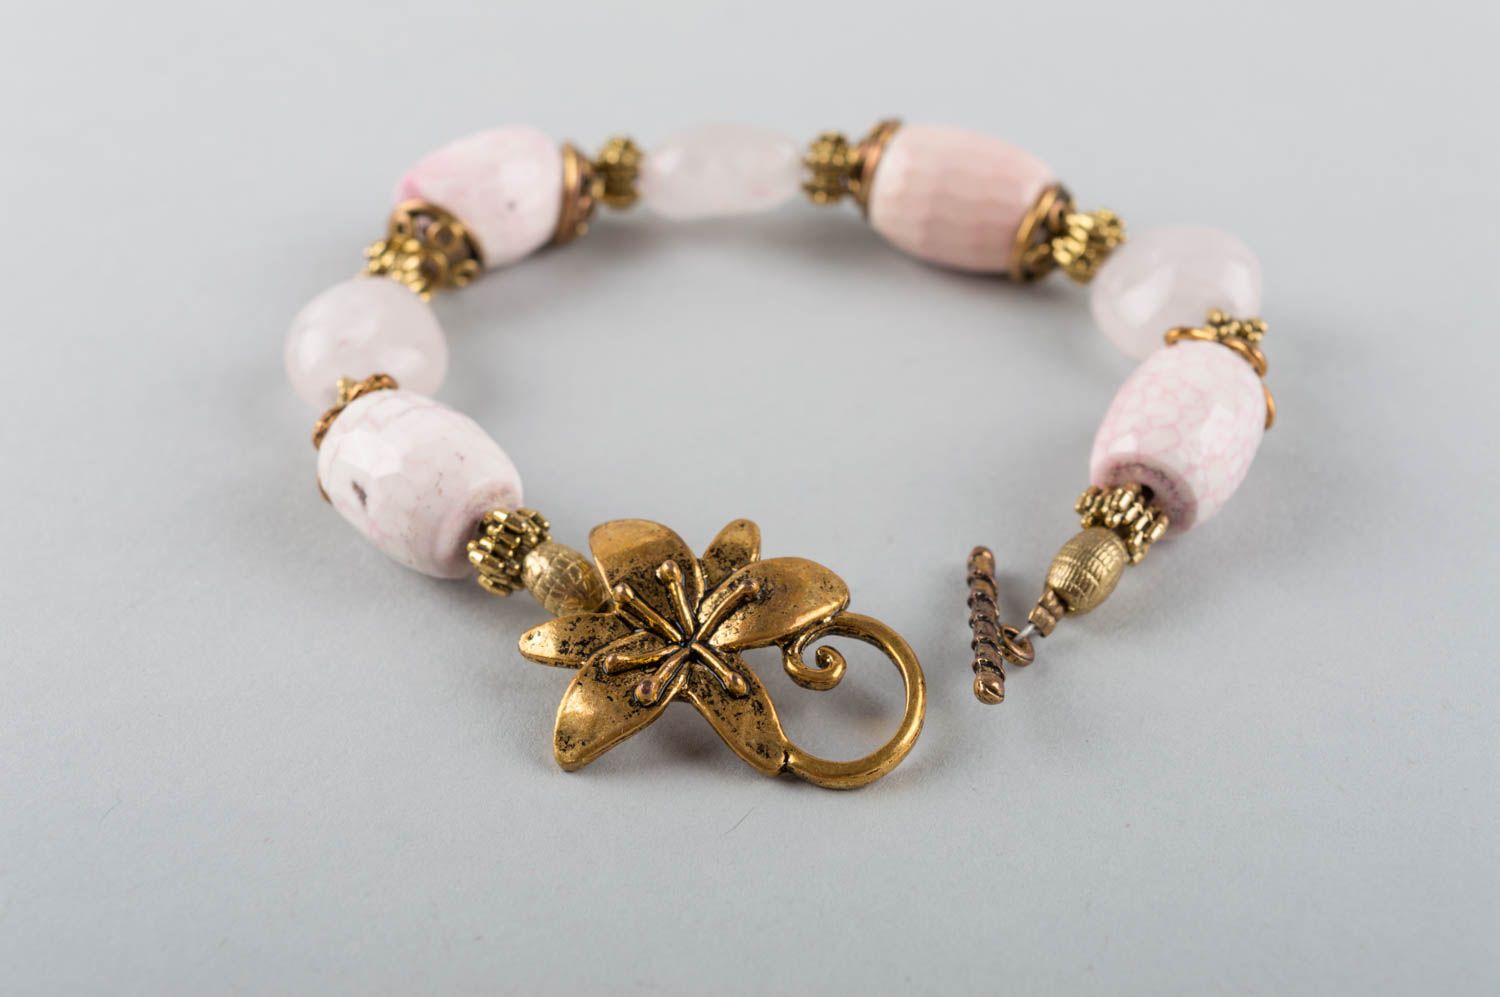 Handmade brass bracelet with natural stones agate bracelet quartz accessory photo 4